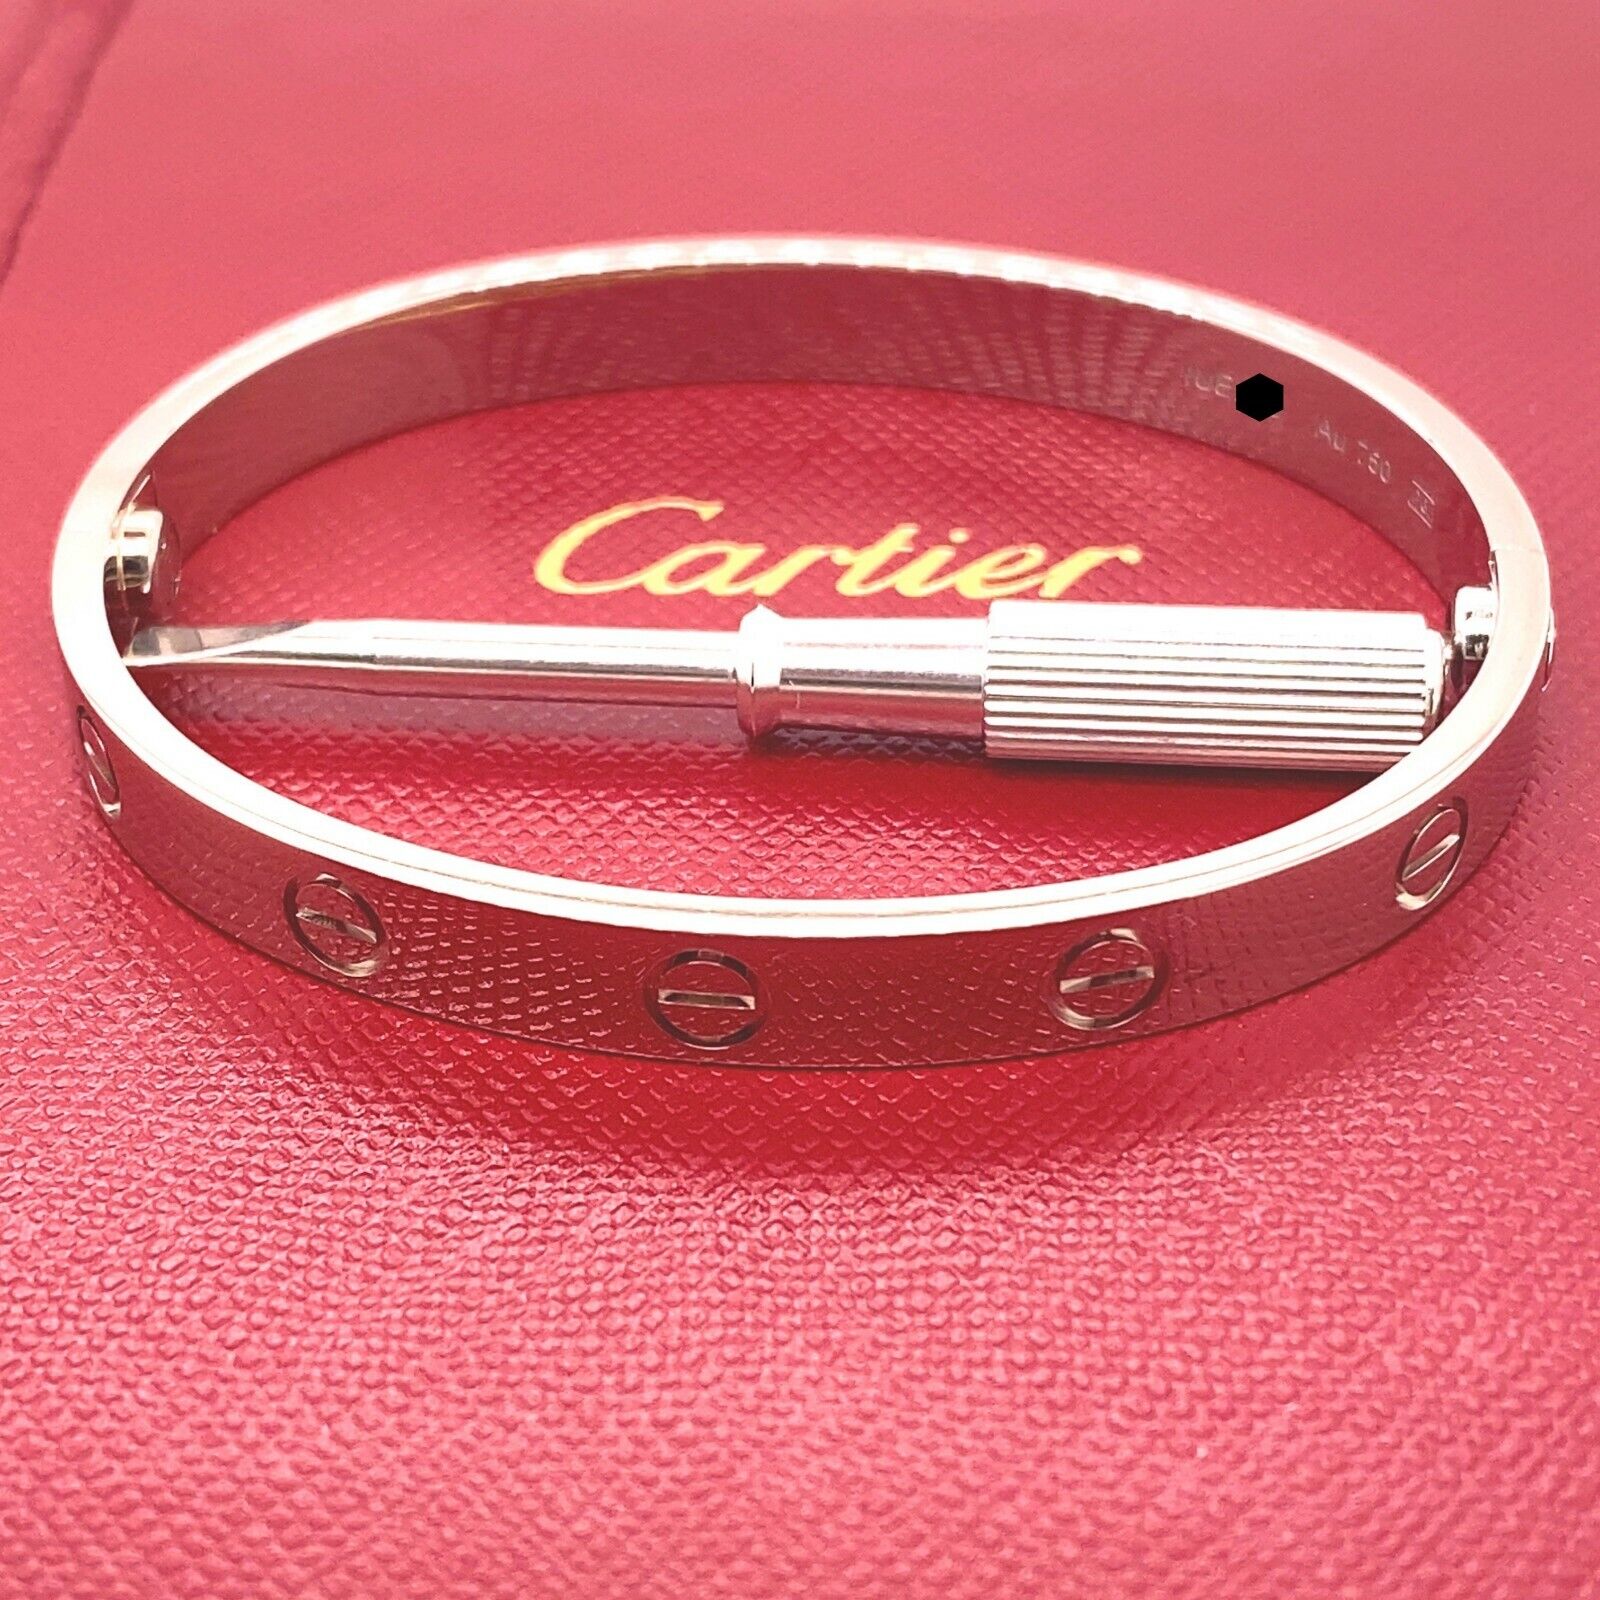 Cartier LOVE 18KT White Gold Bracelet Bangle COA Boxes SZ 16